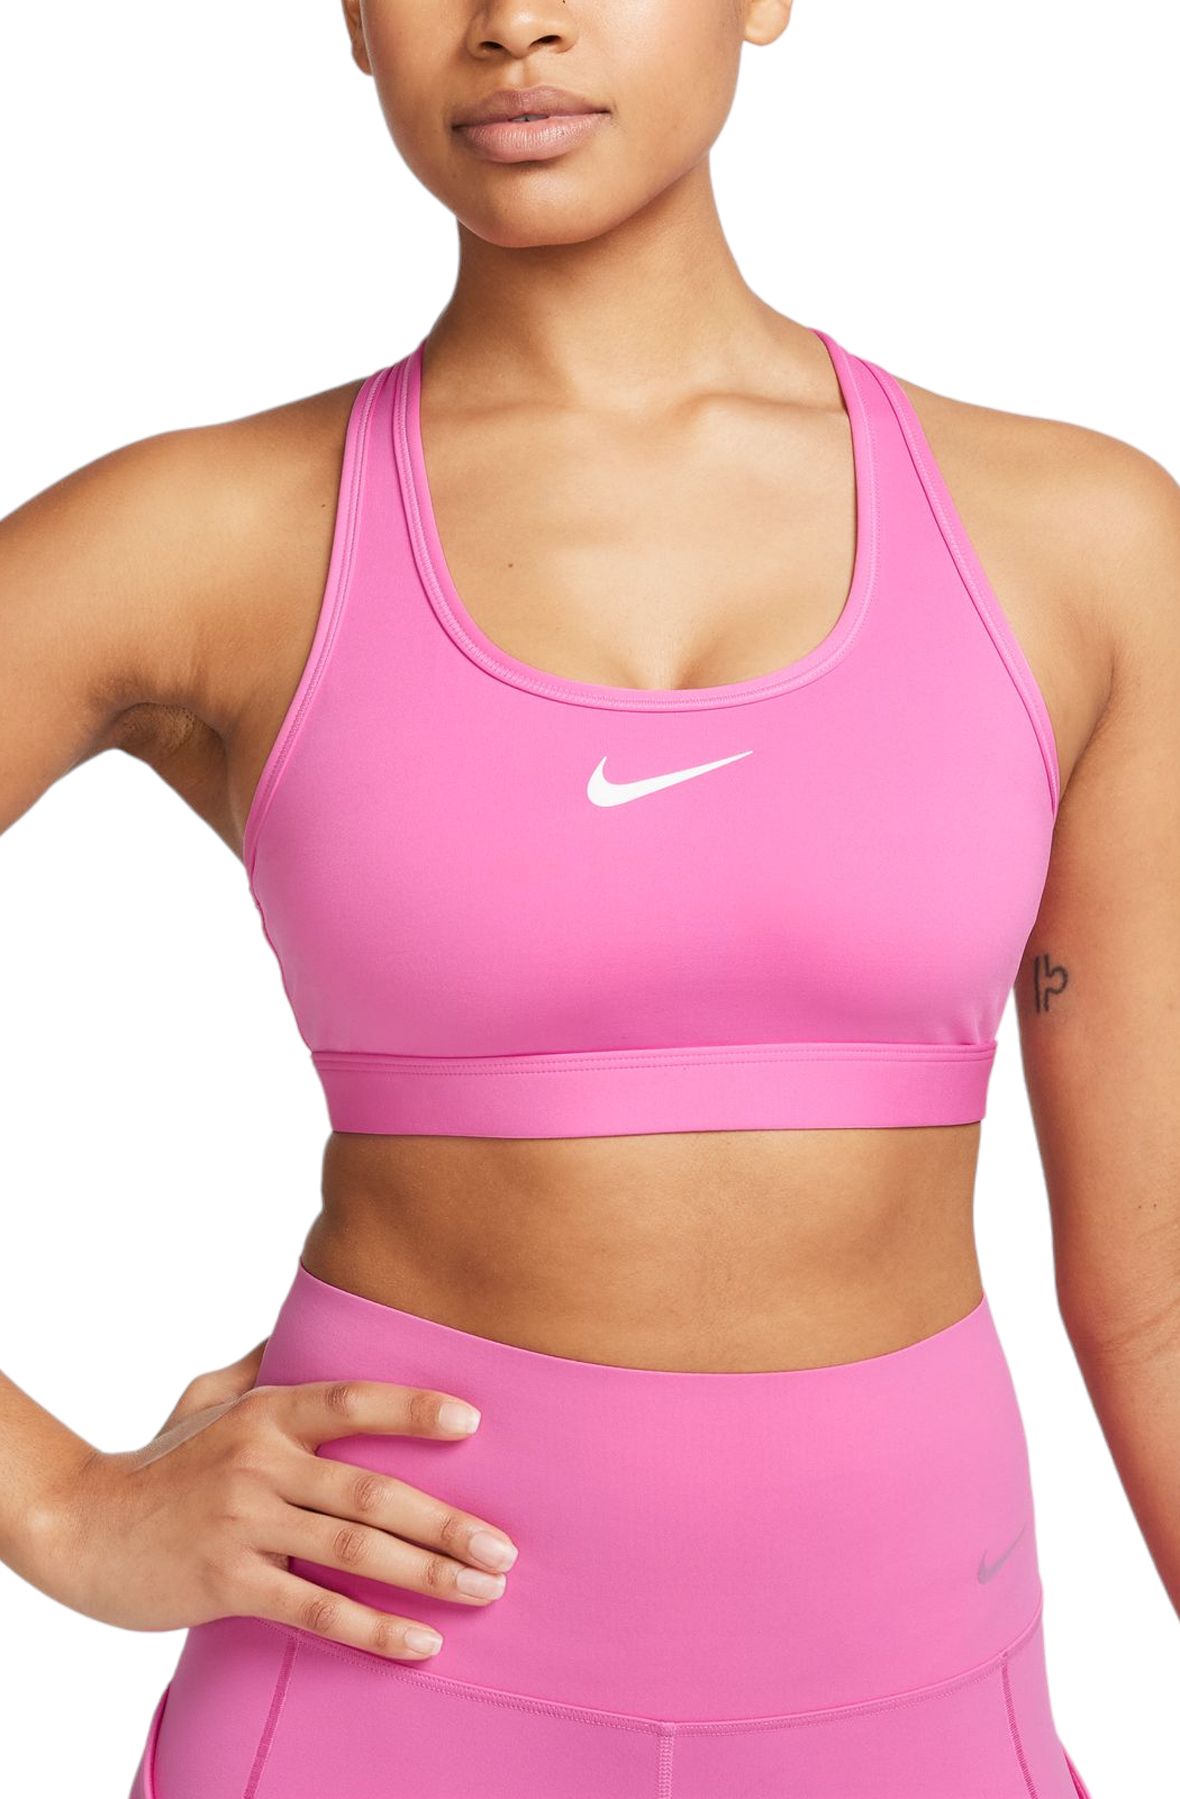 Lot of 2 Women’s Nike pro combat sports bra black size L new